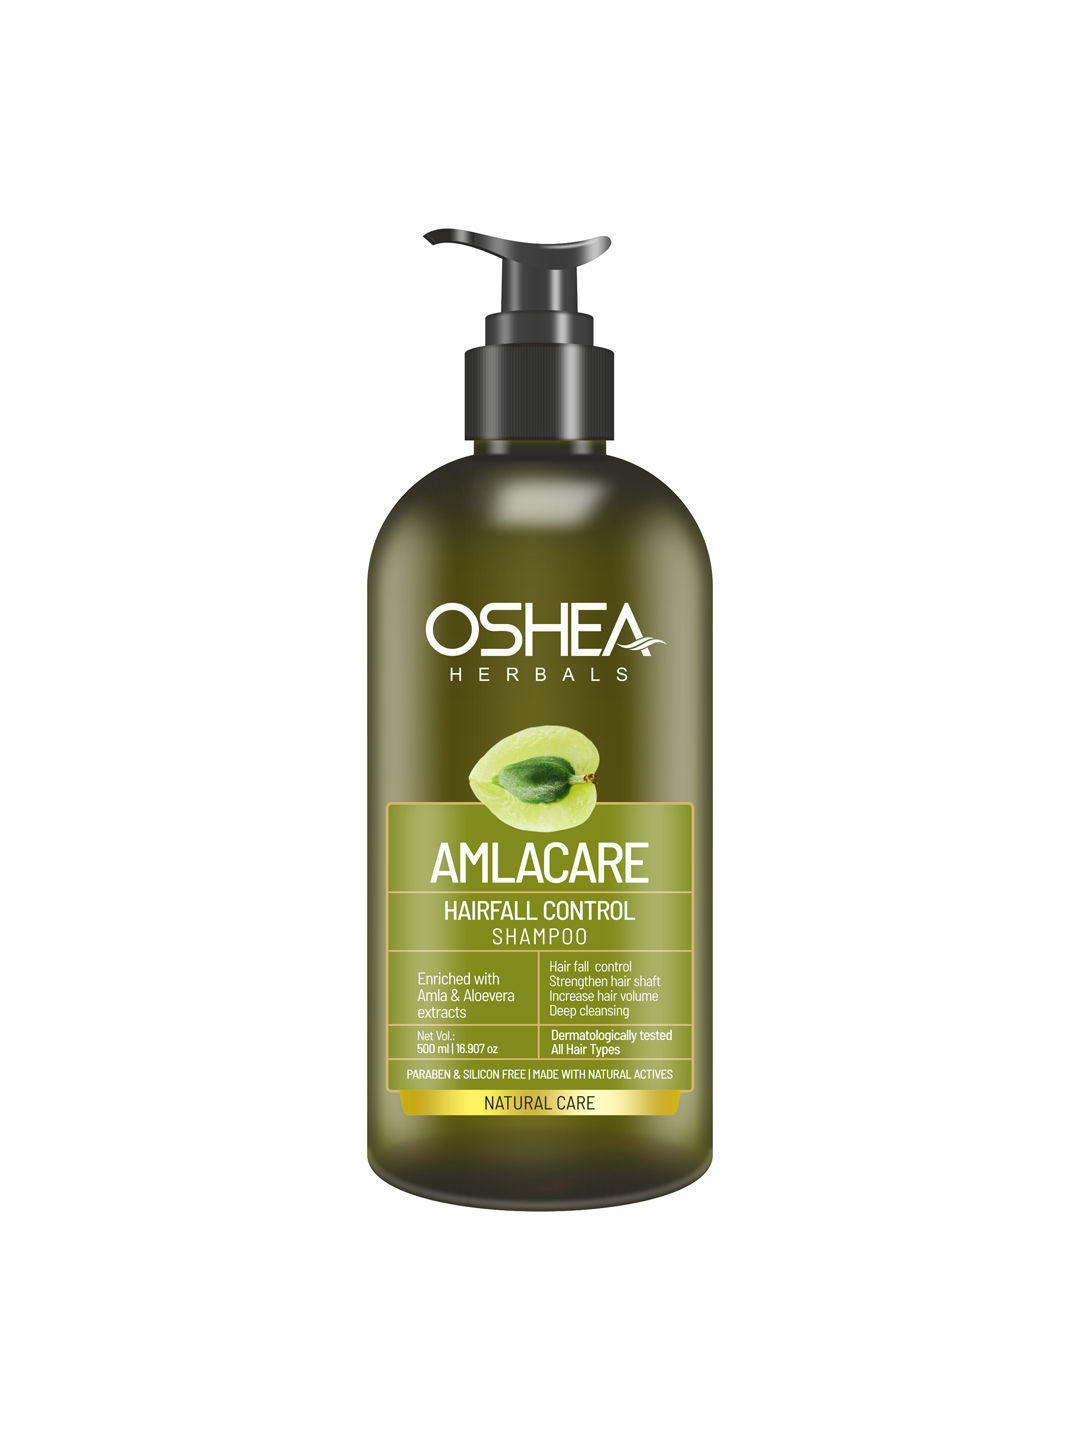 Oshea Herbals Amla Care Hairfall Control Shampoo